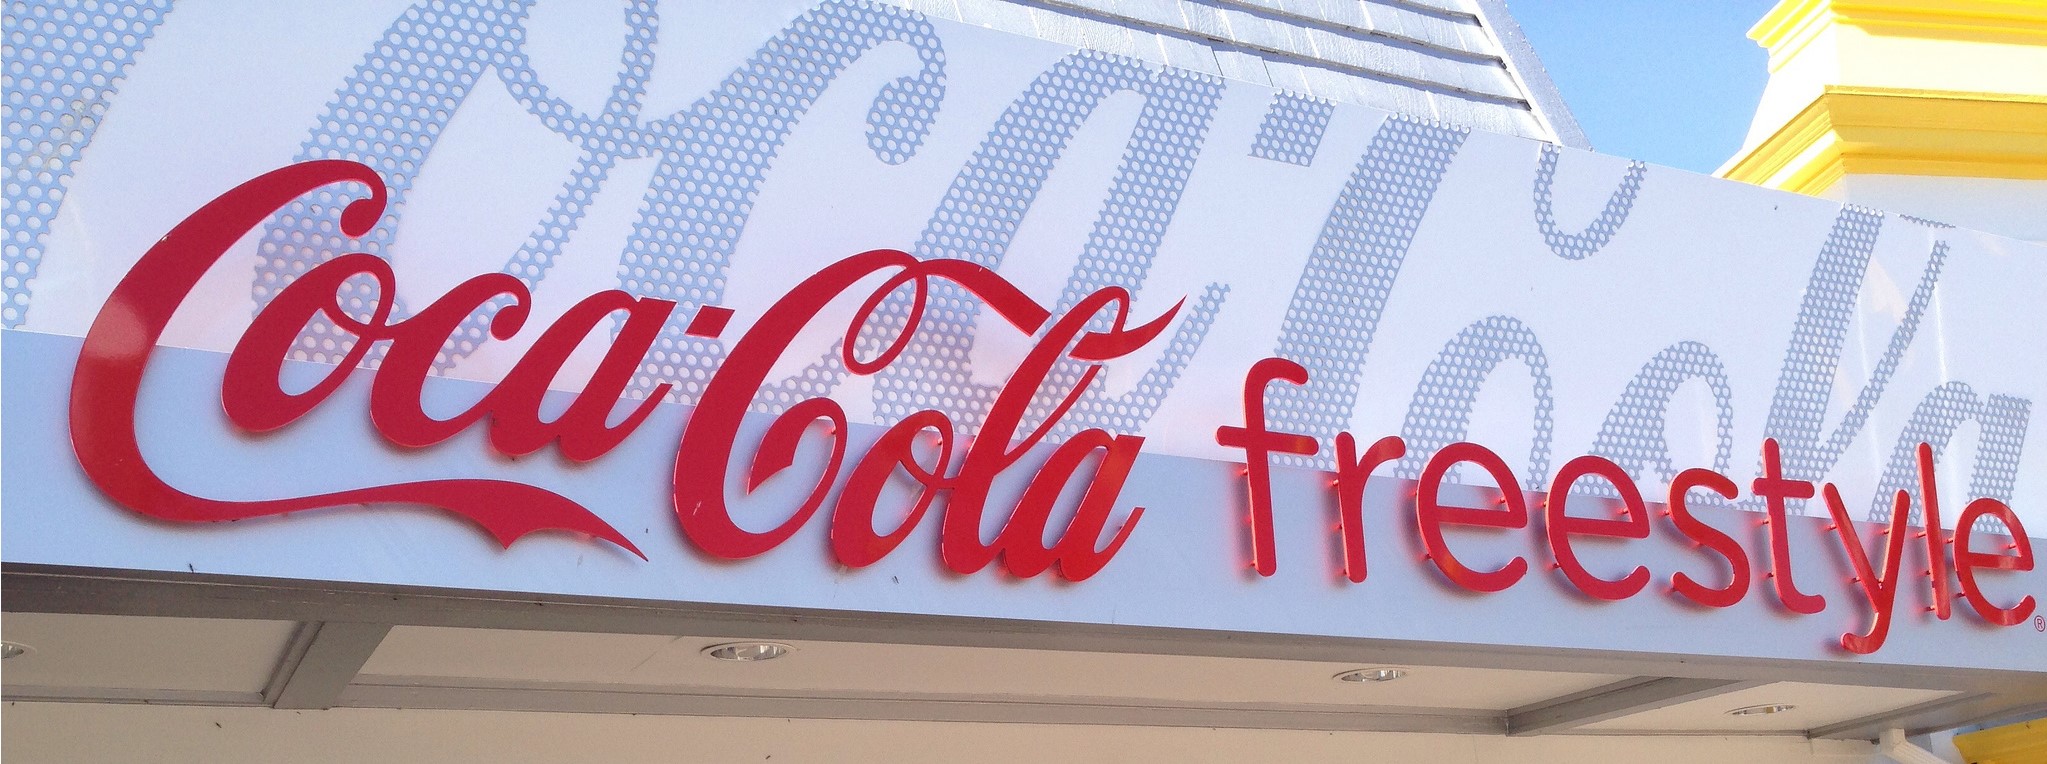 Coca-Cola freestyle sign